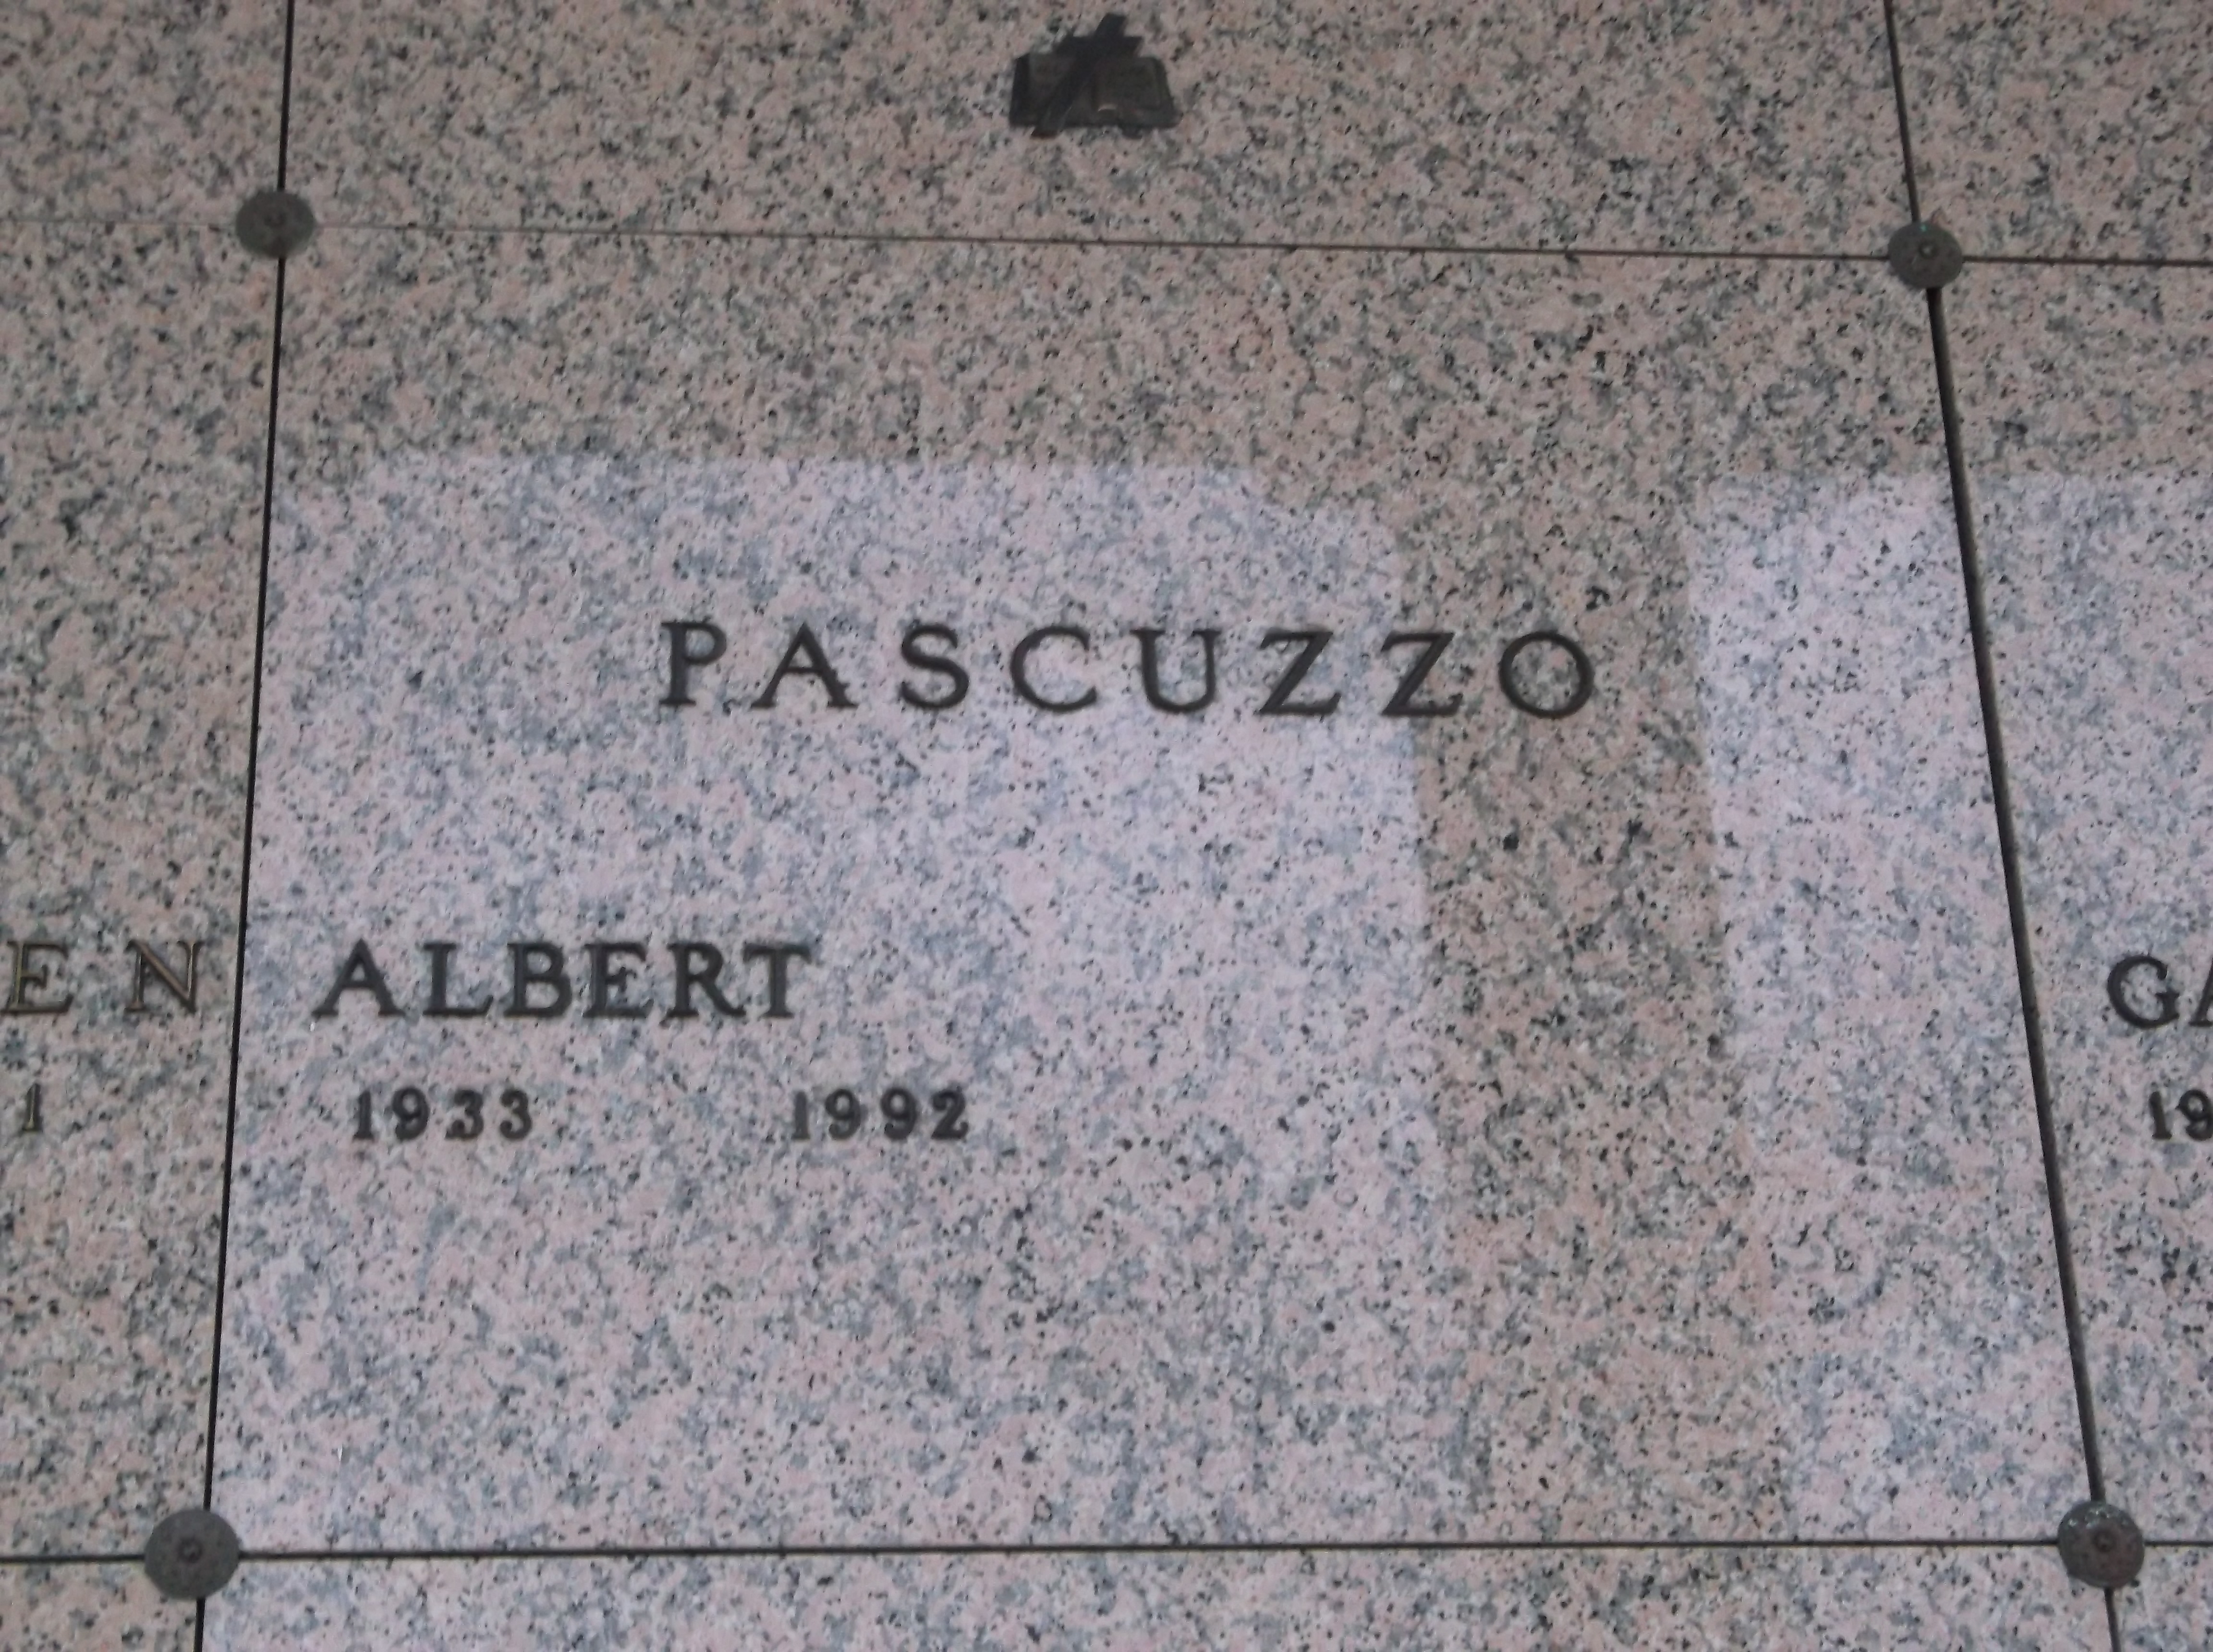 Albert Pascuzzo